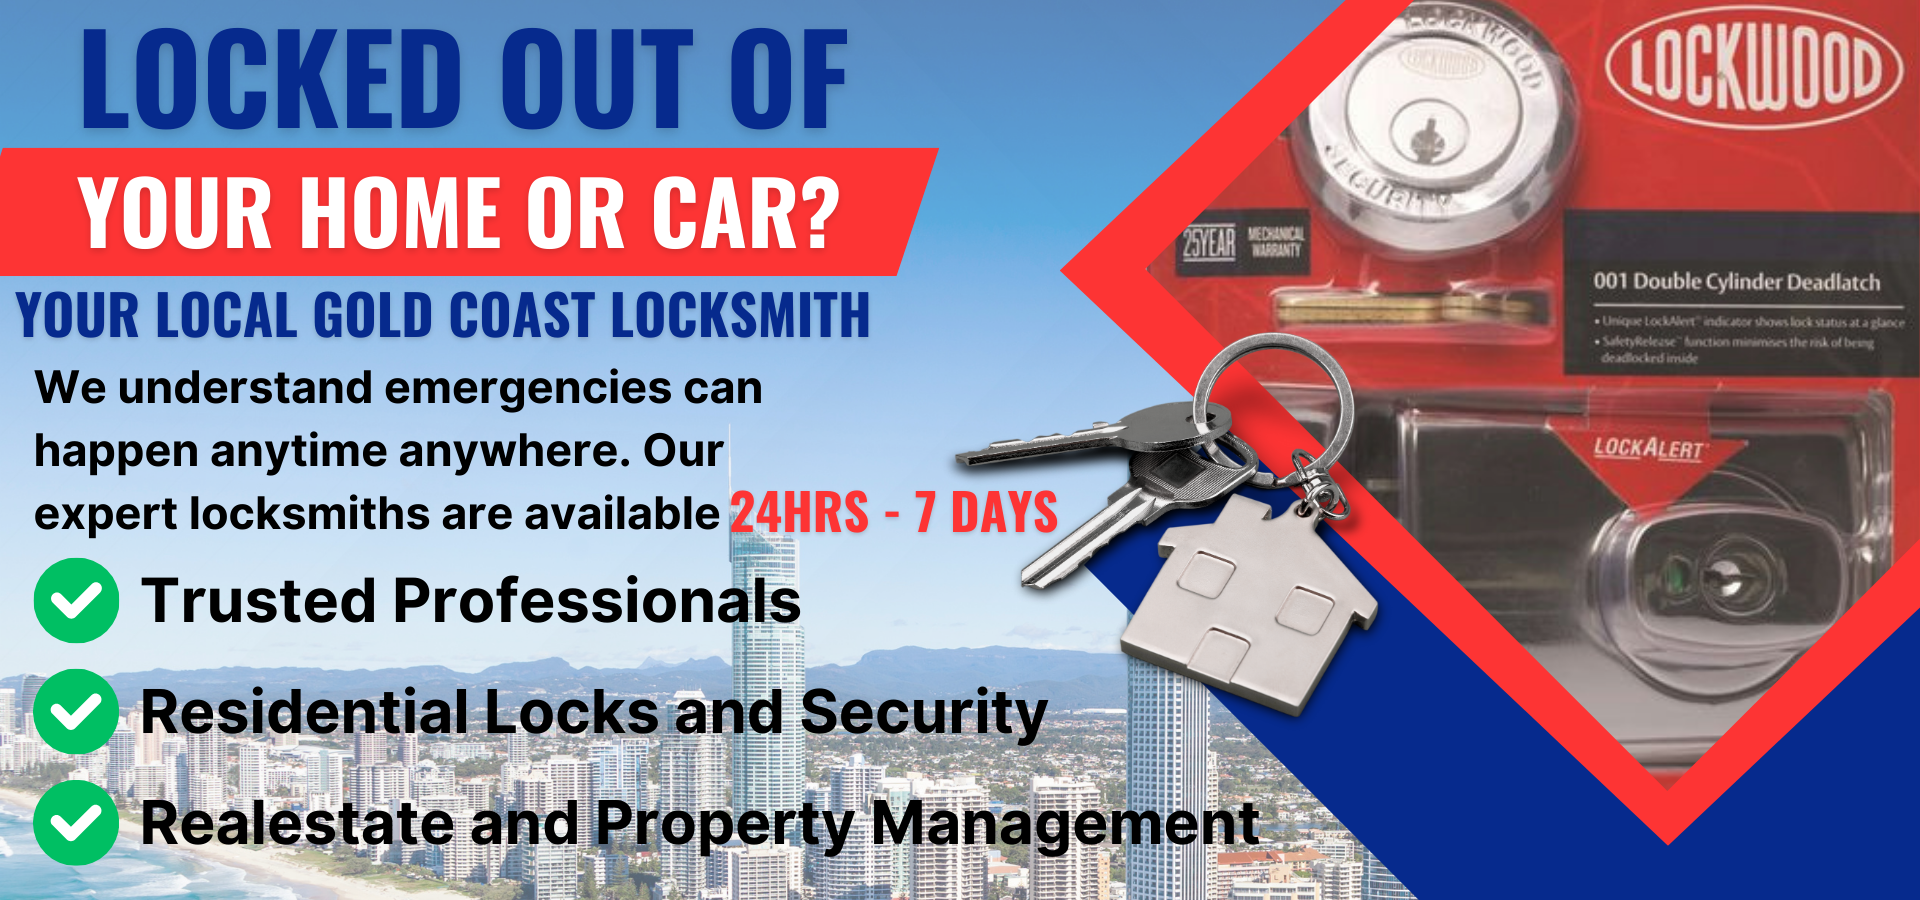 Safe and Sound Locksmiths - Gold Coast to Tweed Heads 24 Hour Locksmith Service